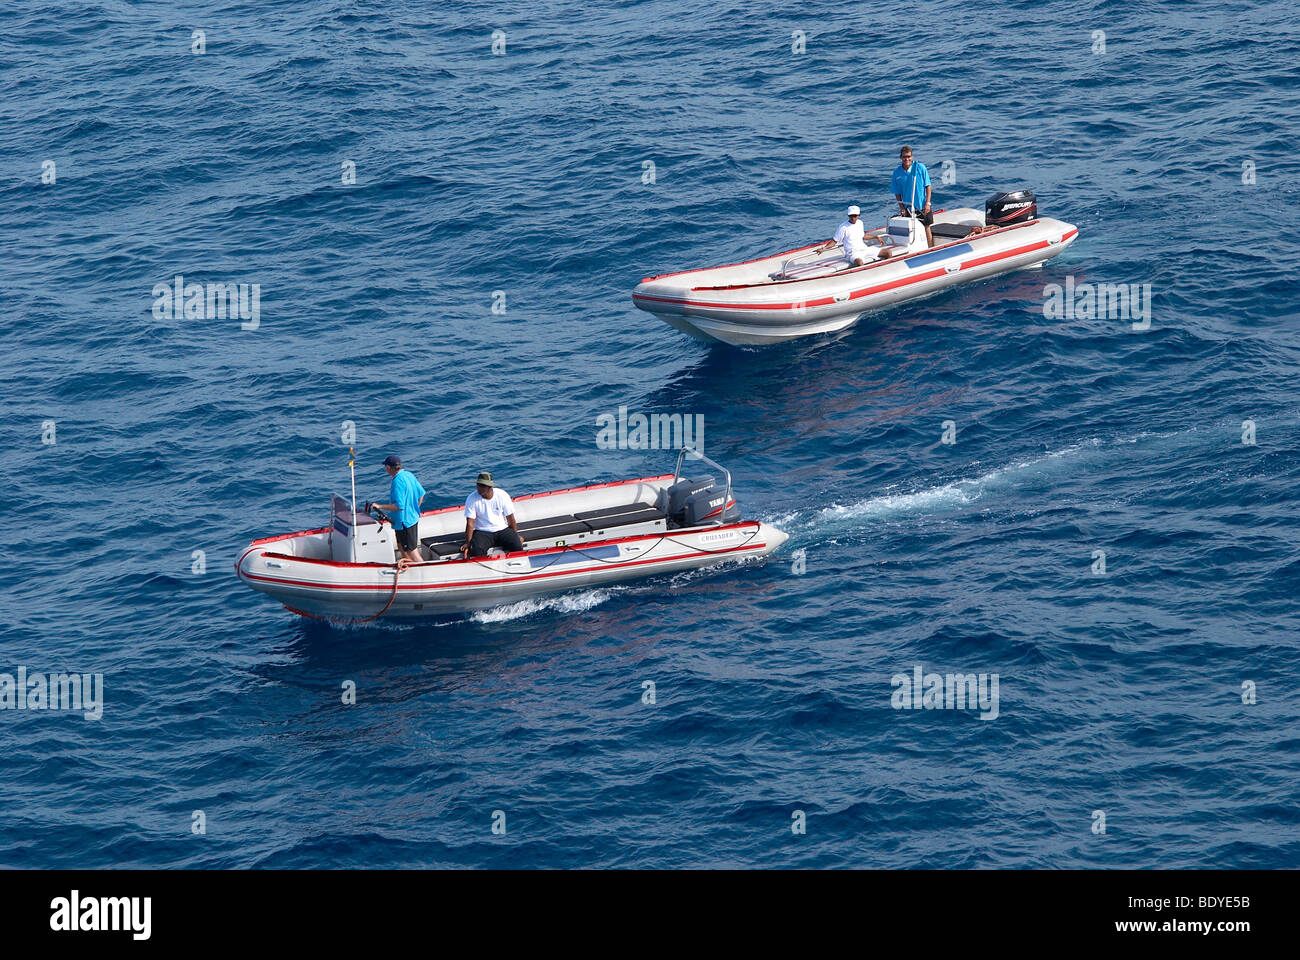 Boat, speed boat, rubber duck, rubber dinghy, sea, mozambique coast, blue sea, ocean, barra lodge Stock Photo